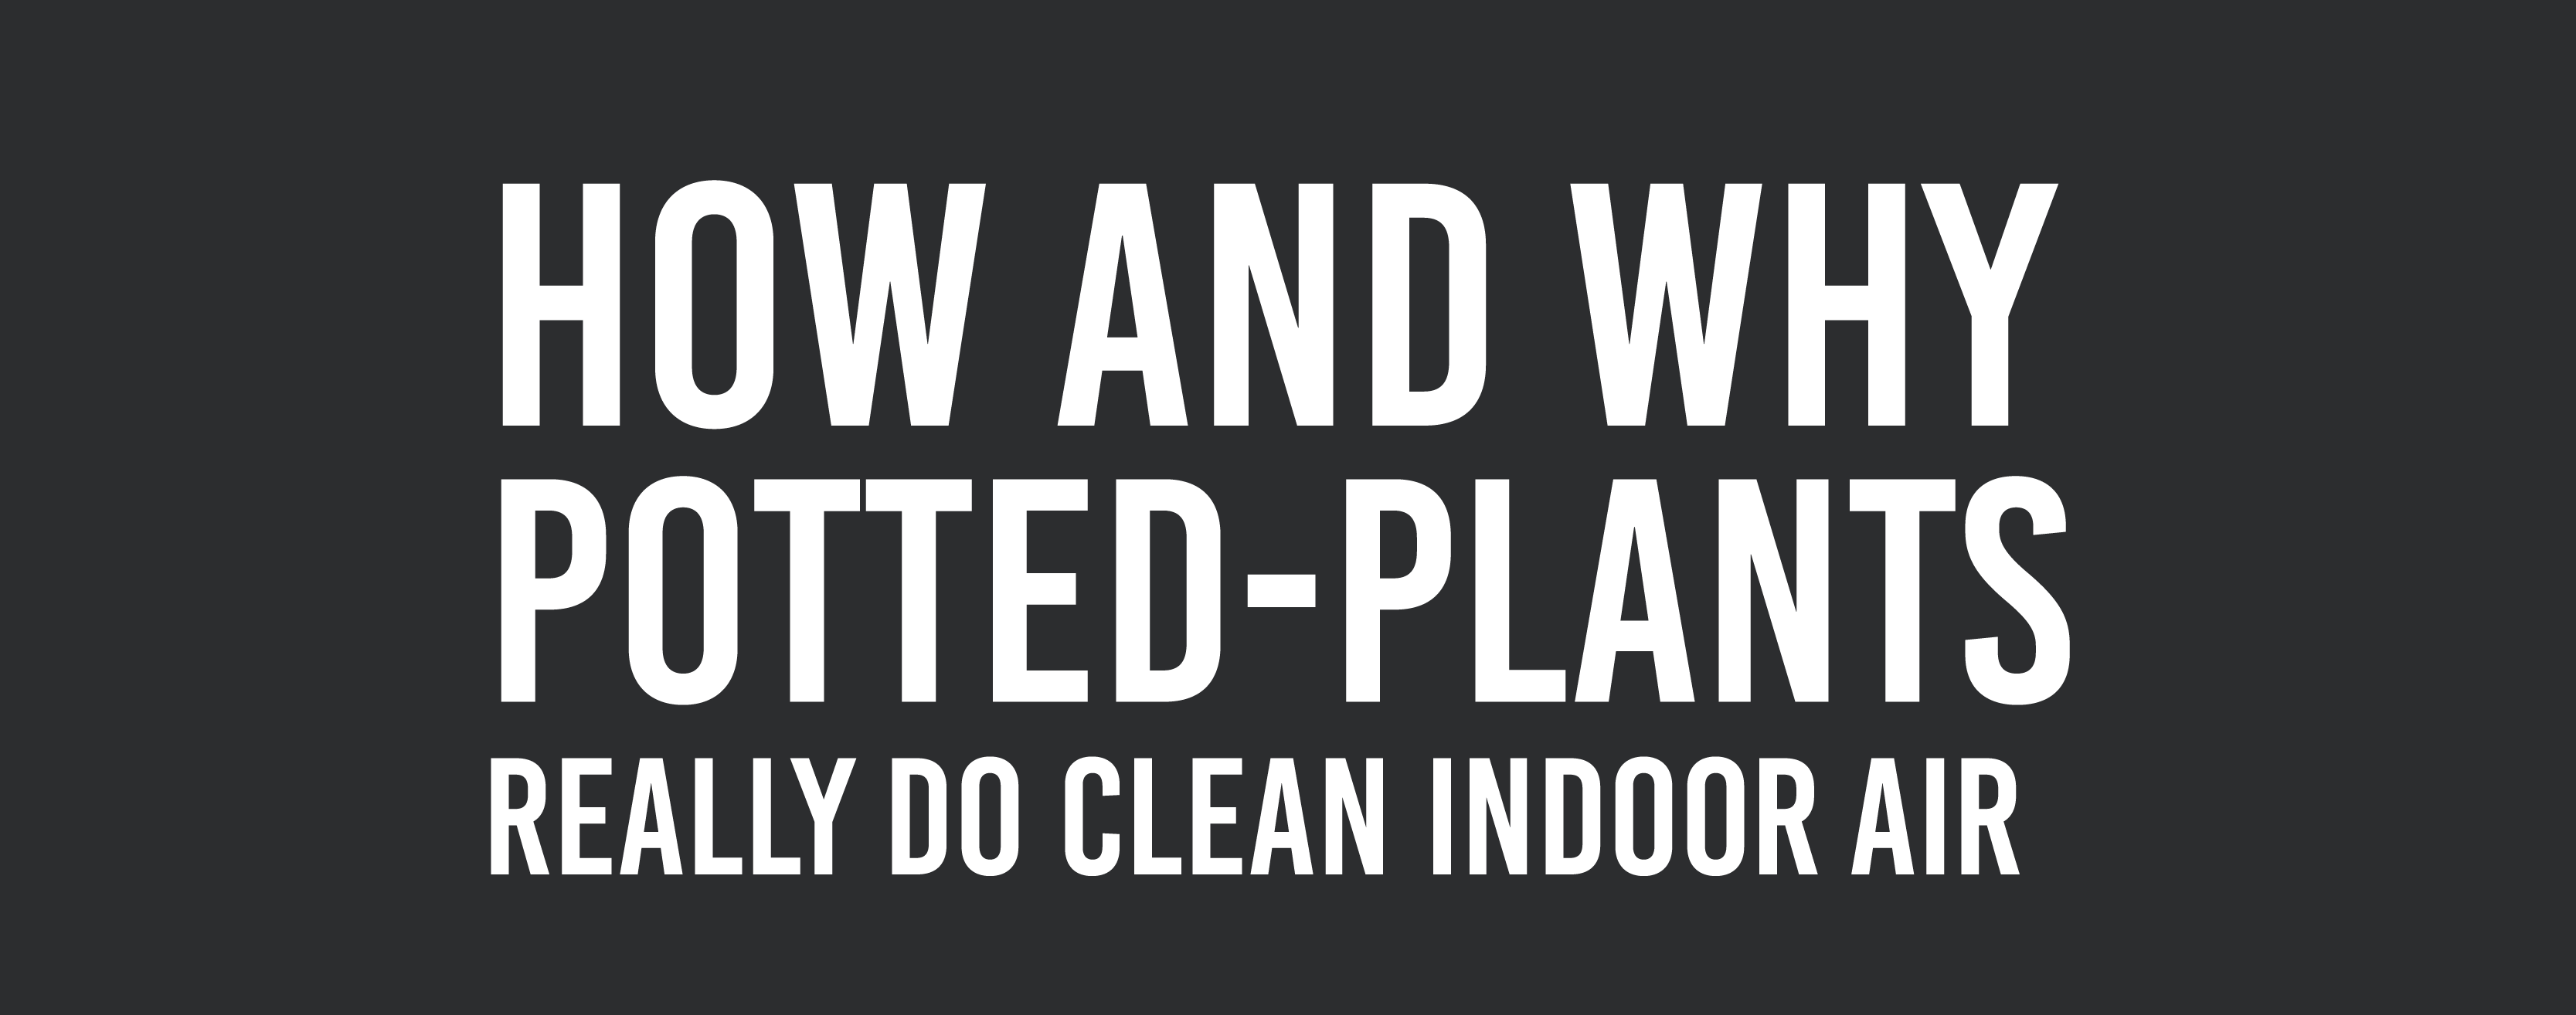 plants clean indoor air